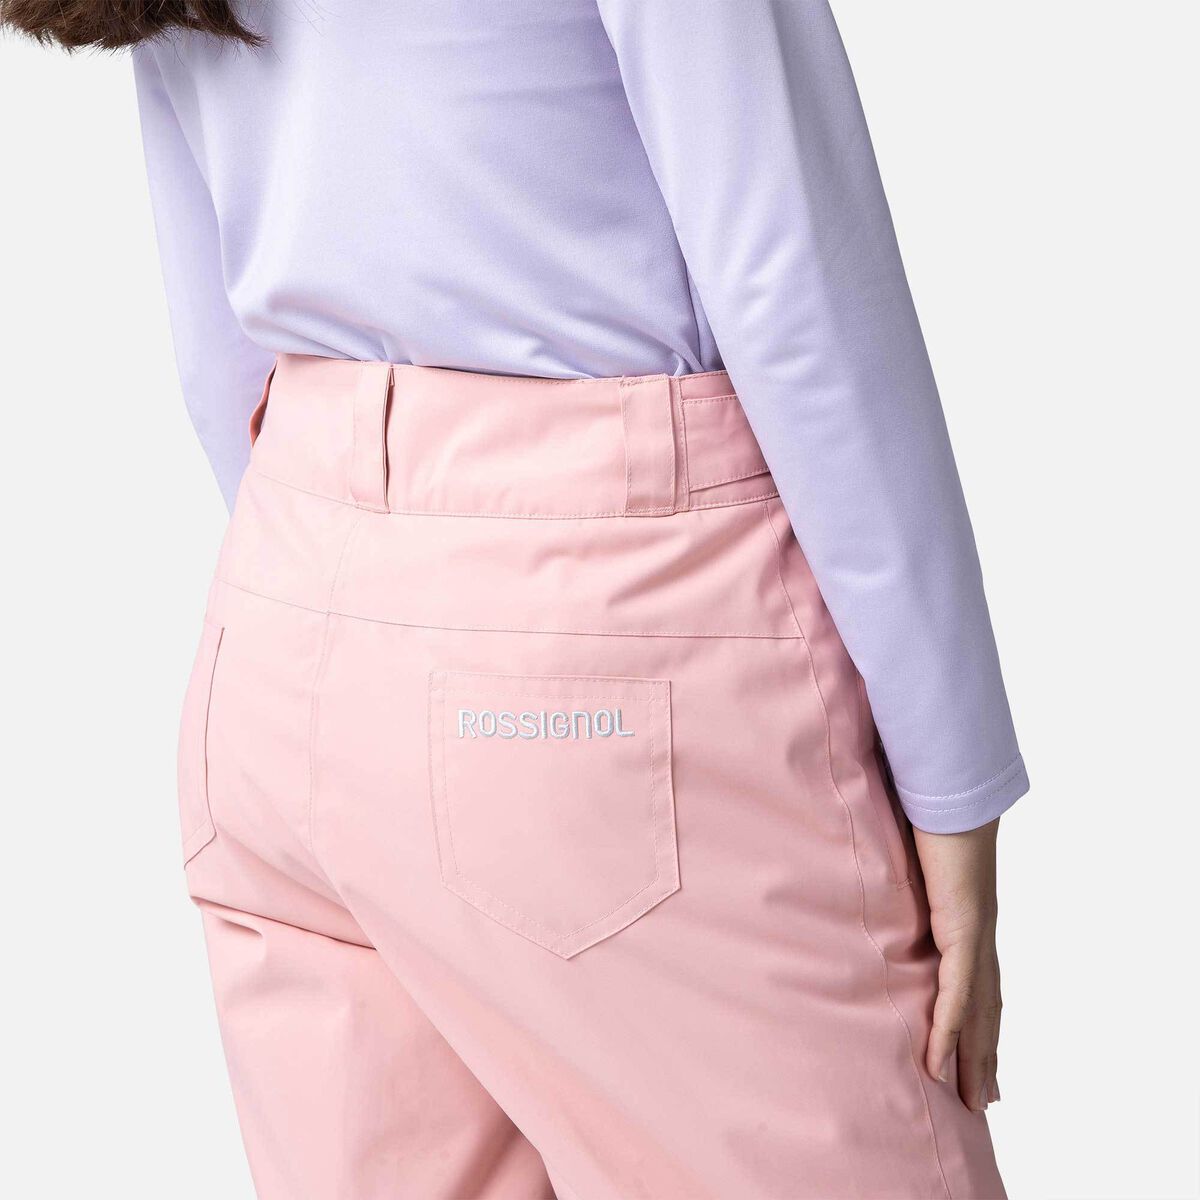 Rossignol Girls' Ski Pants pinkpurple